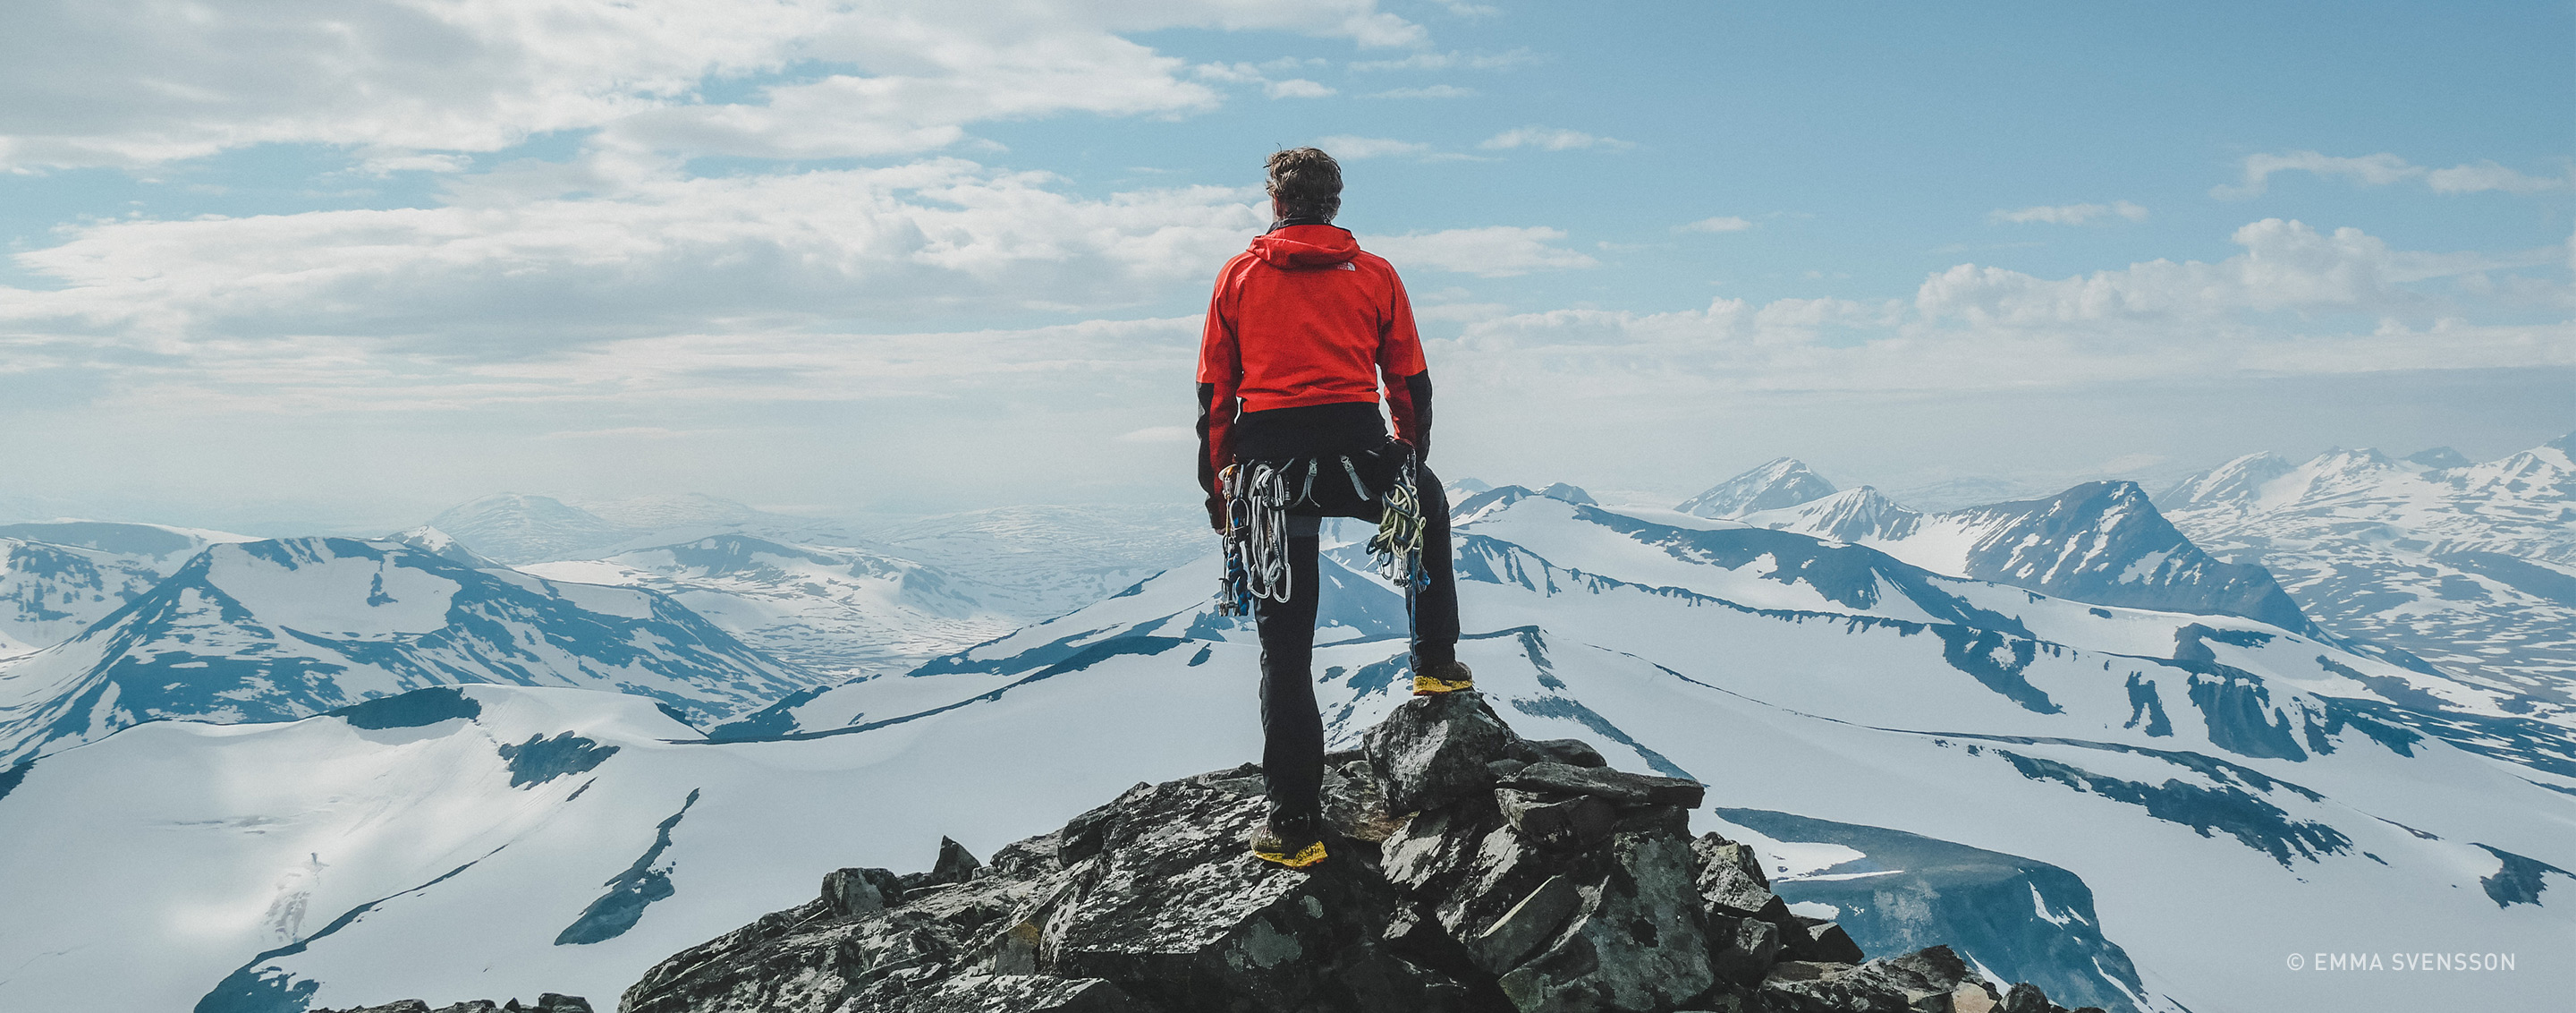 hiker standing on mountain peak with vista